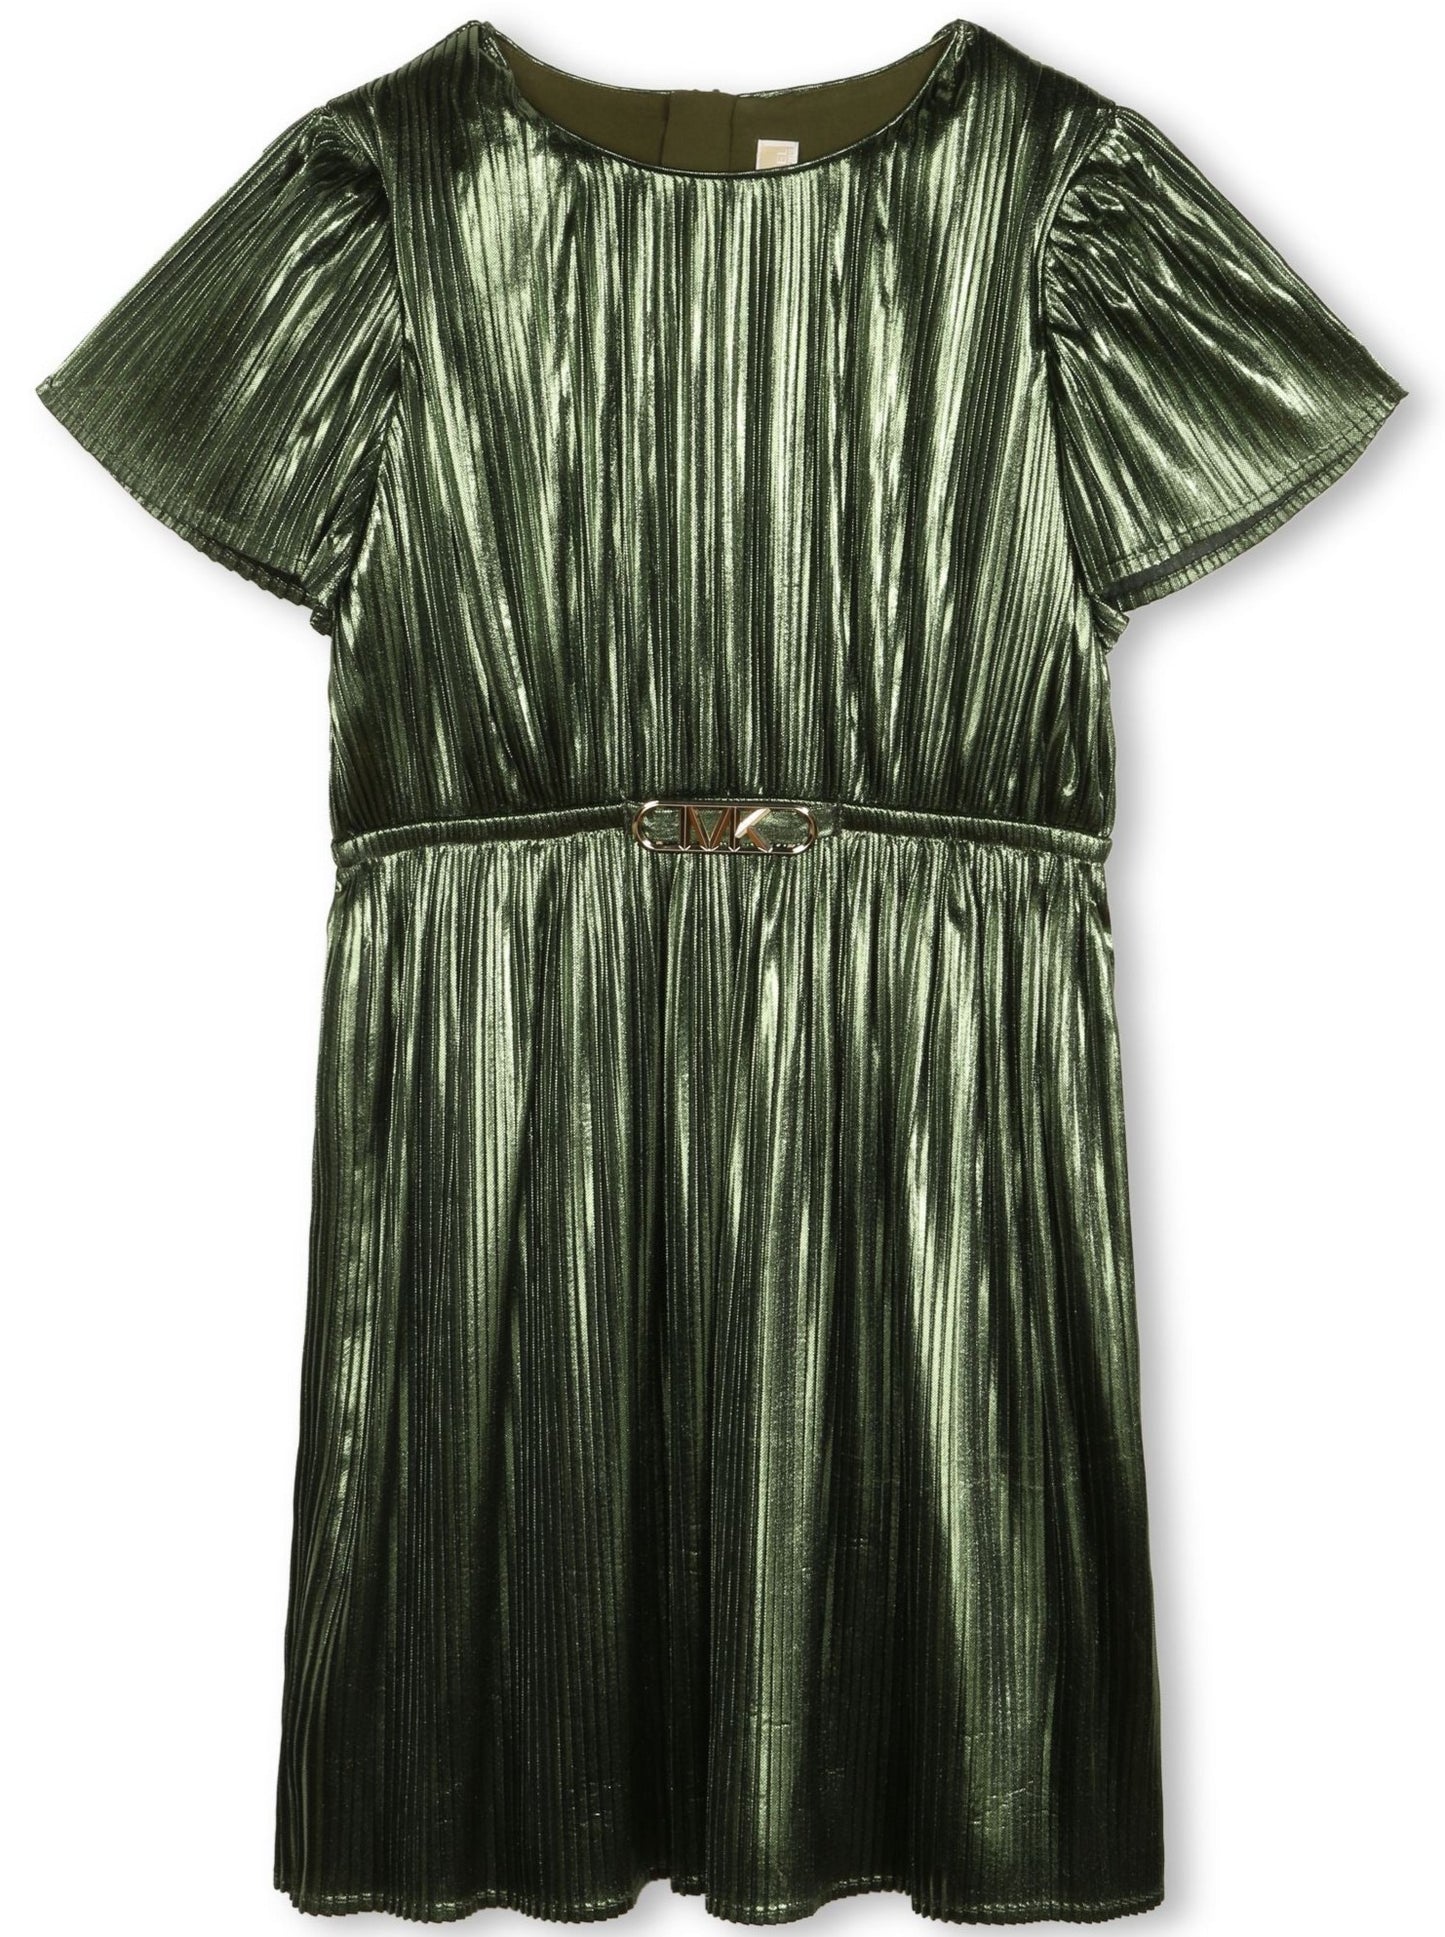 Michael Kors Green Pleated Dress _R12172-633